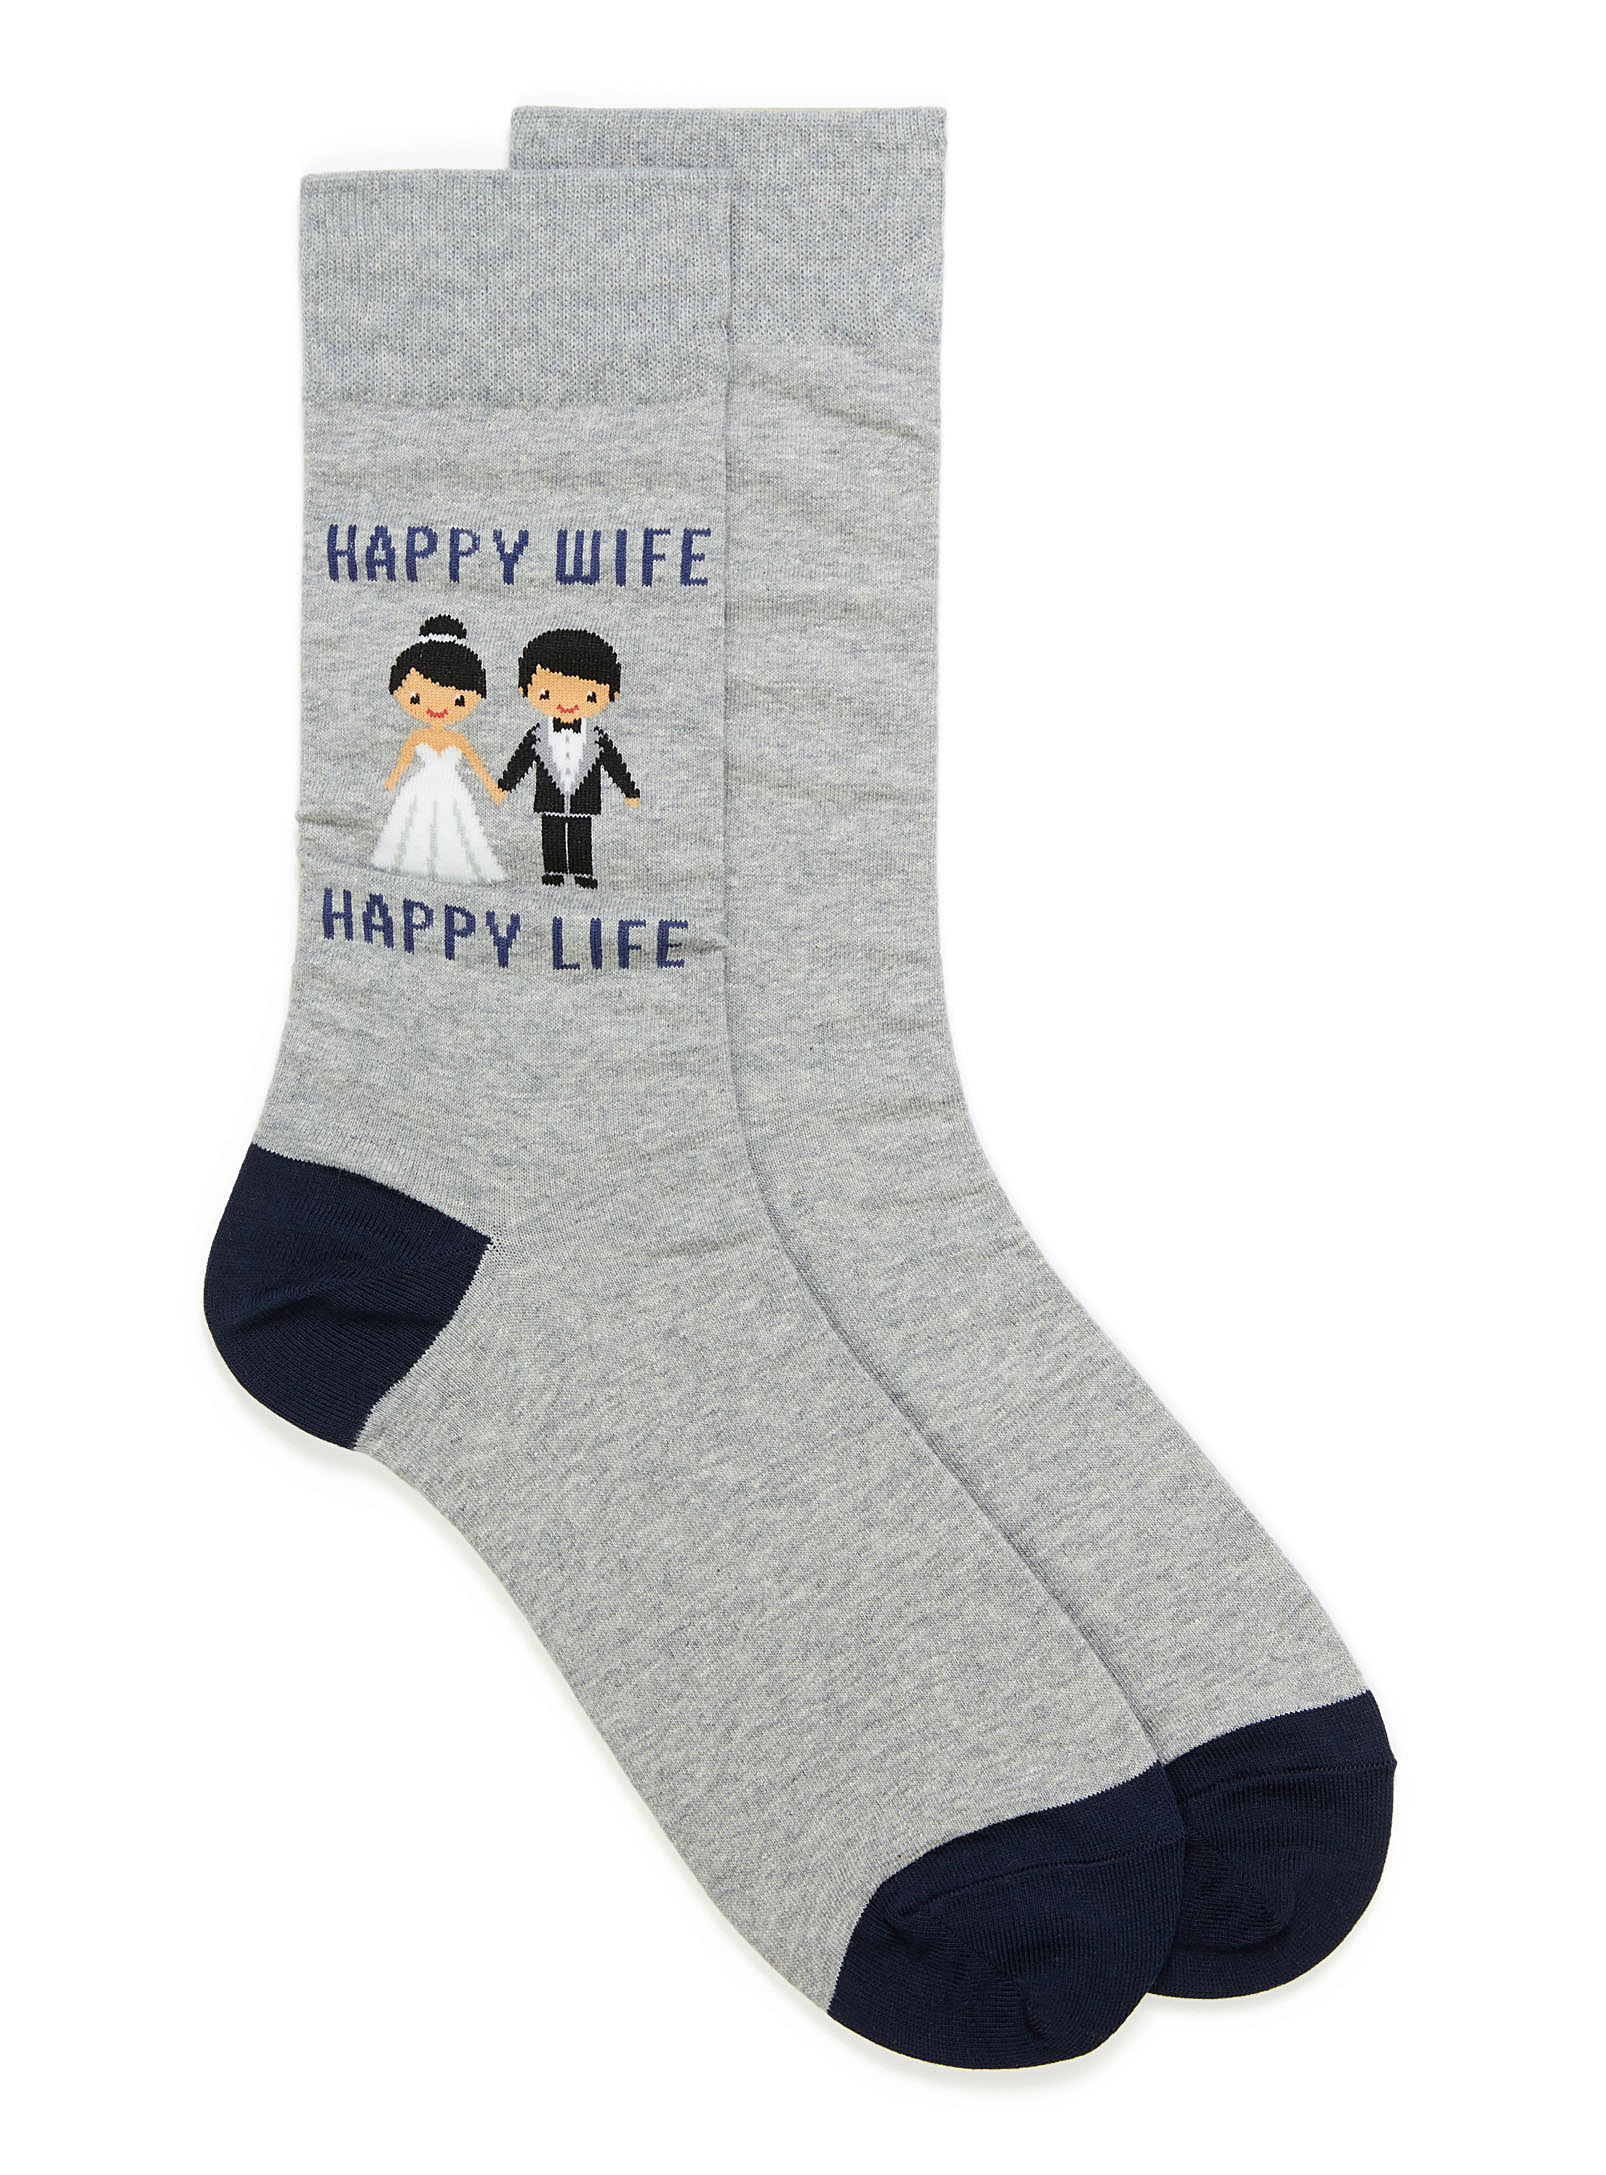 Hot Sox - Men's Happy Wife socks